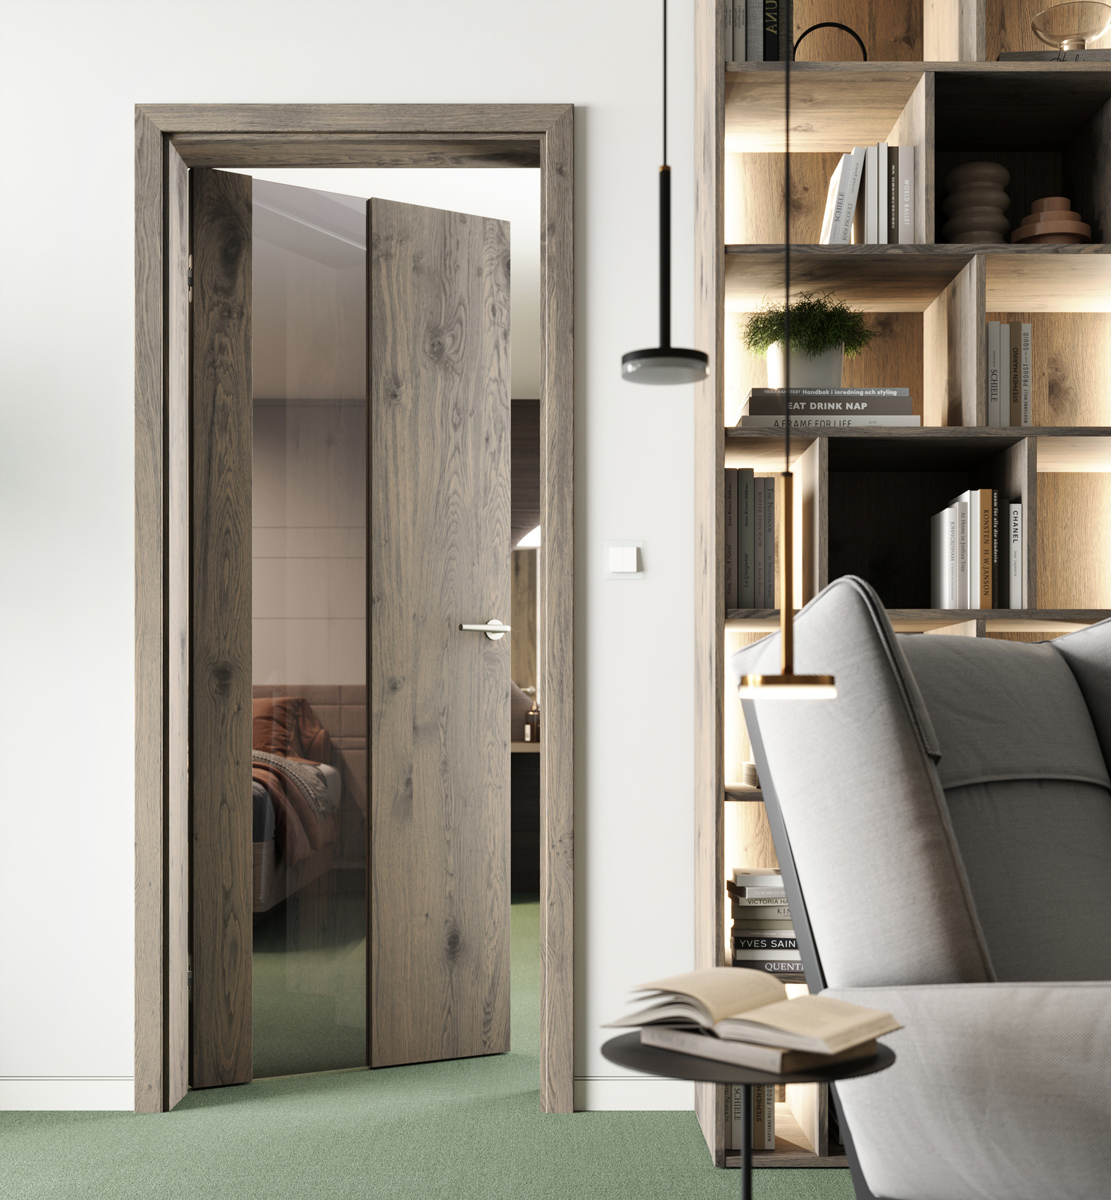 Hanák furniture, SPIRIT-LITE interior doors